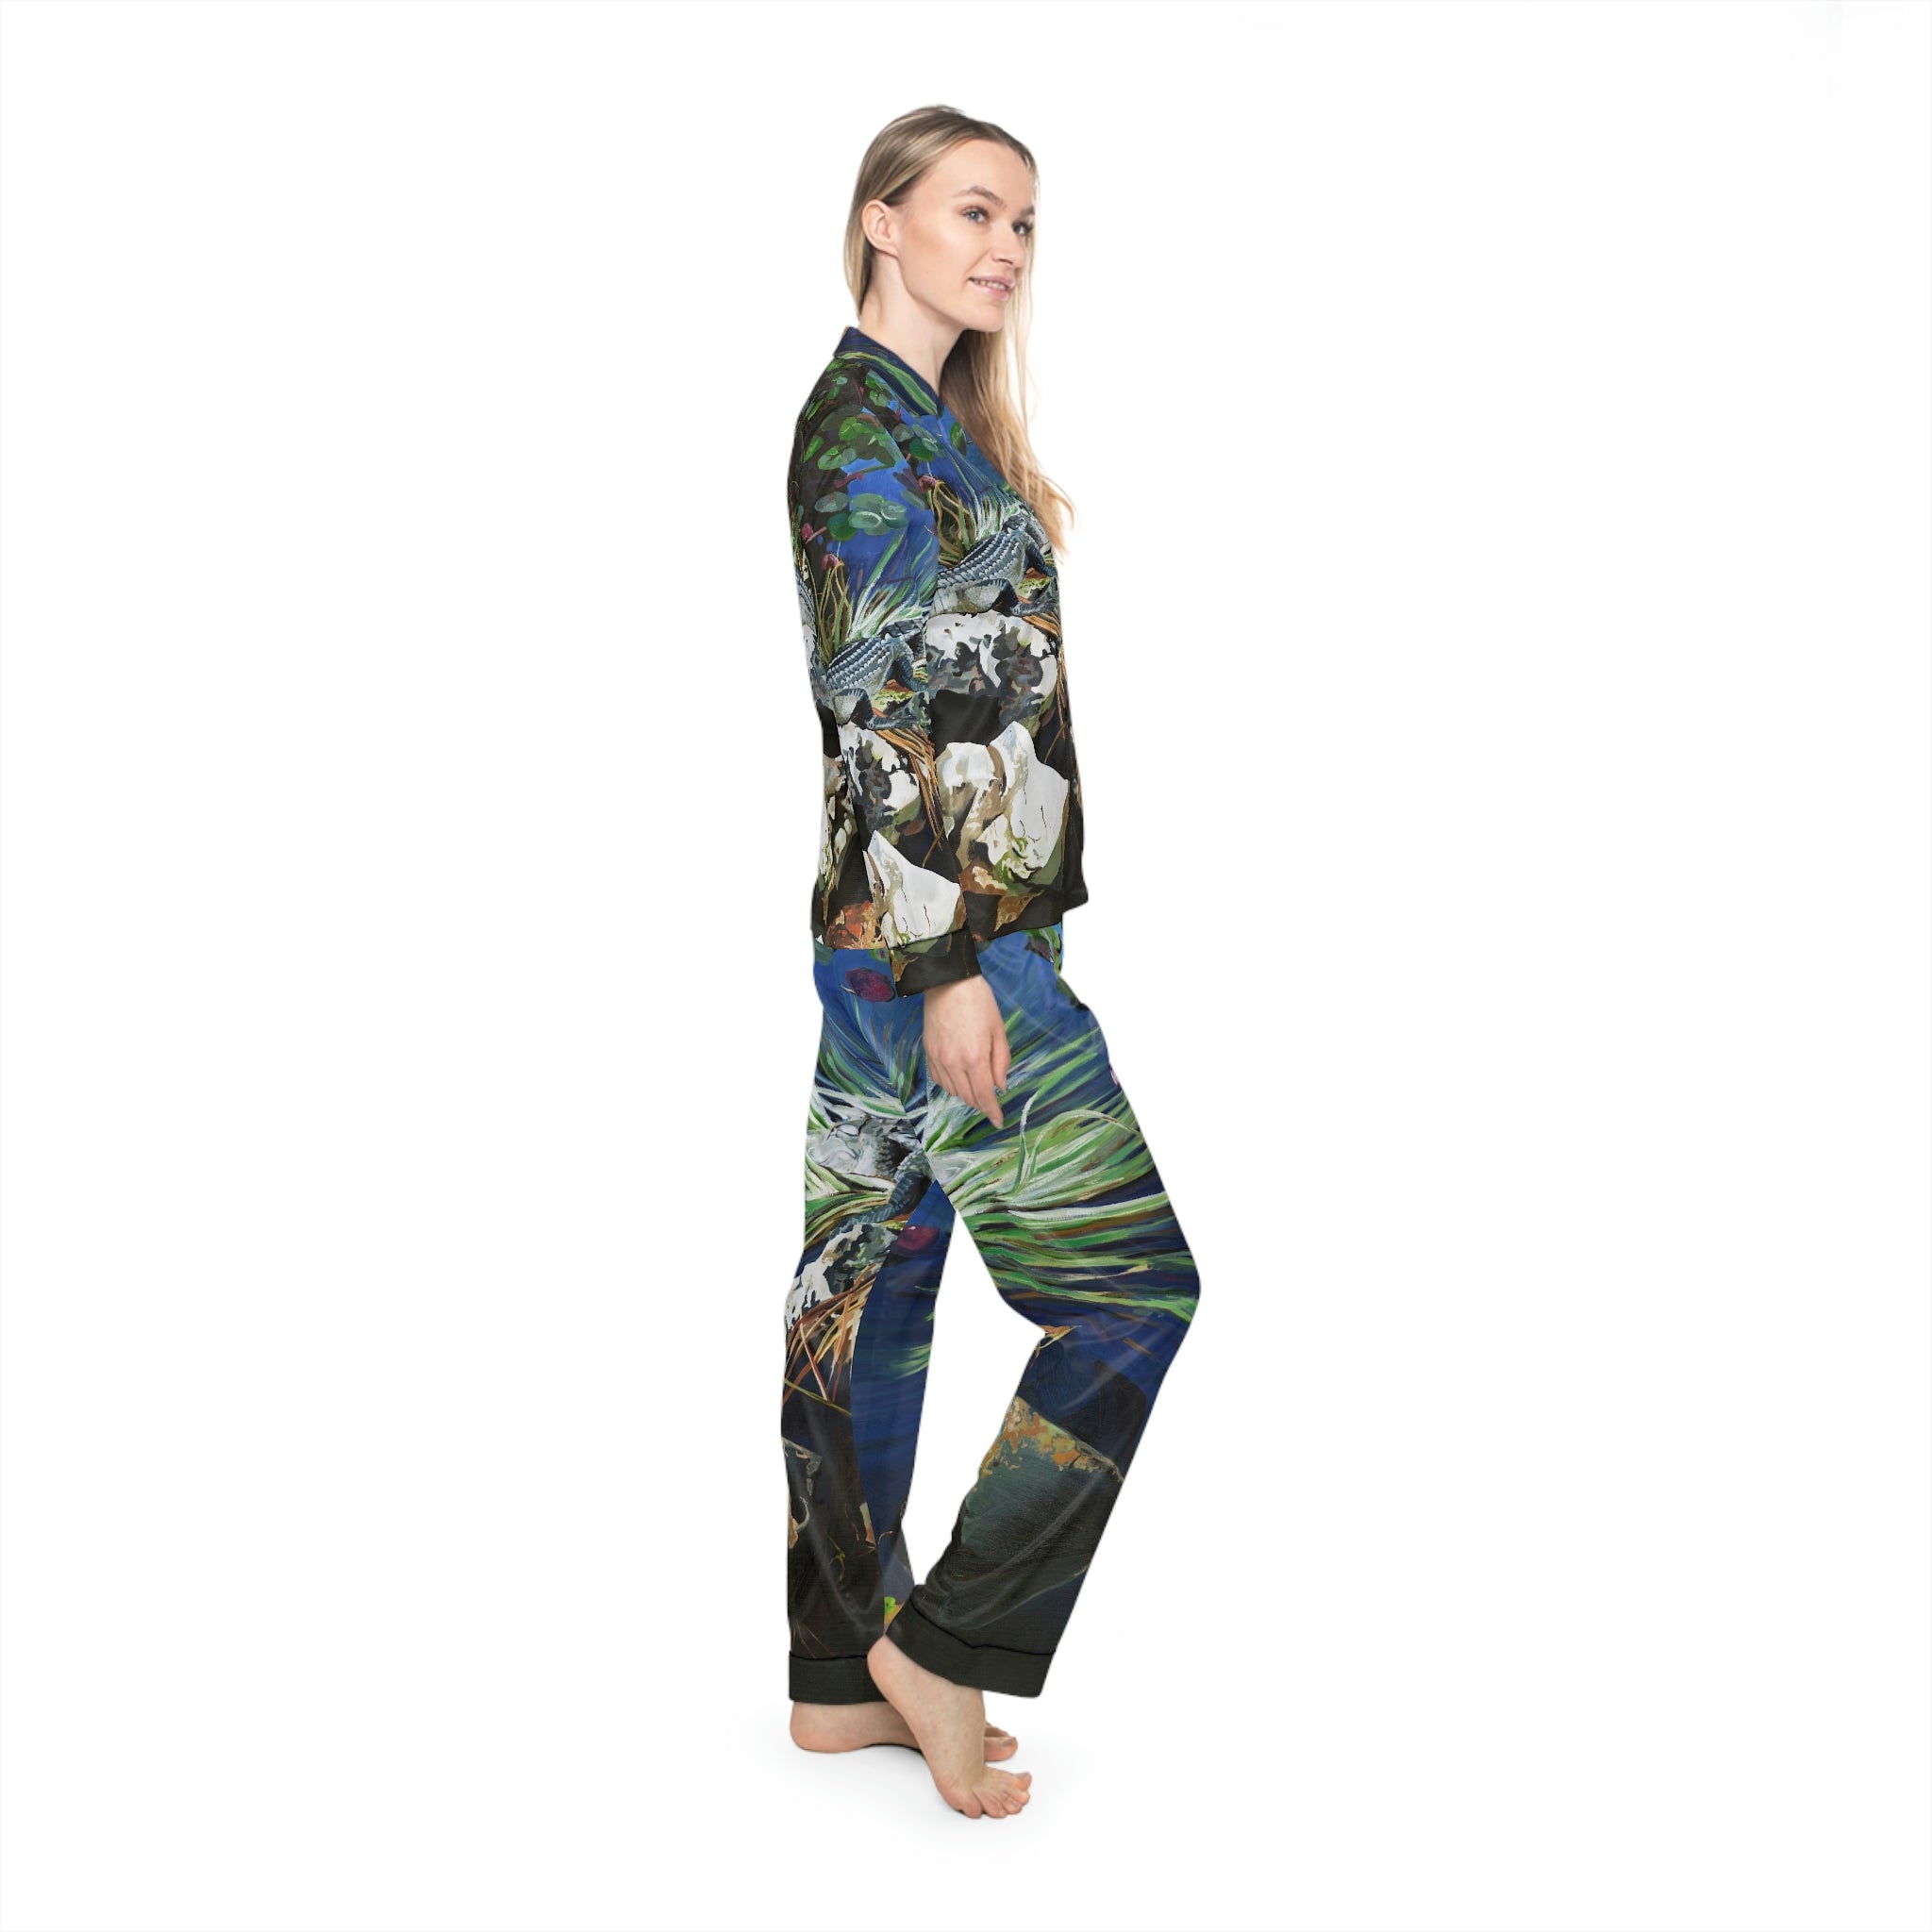 UF Gator Women's Satin Pajamas (AOP)